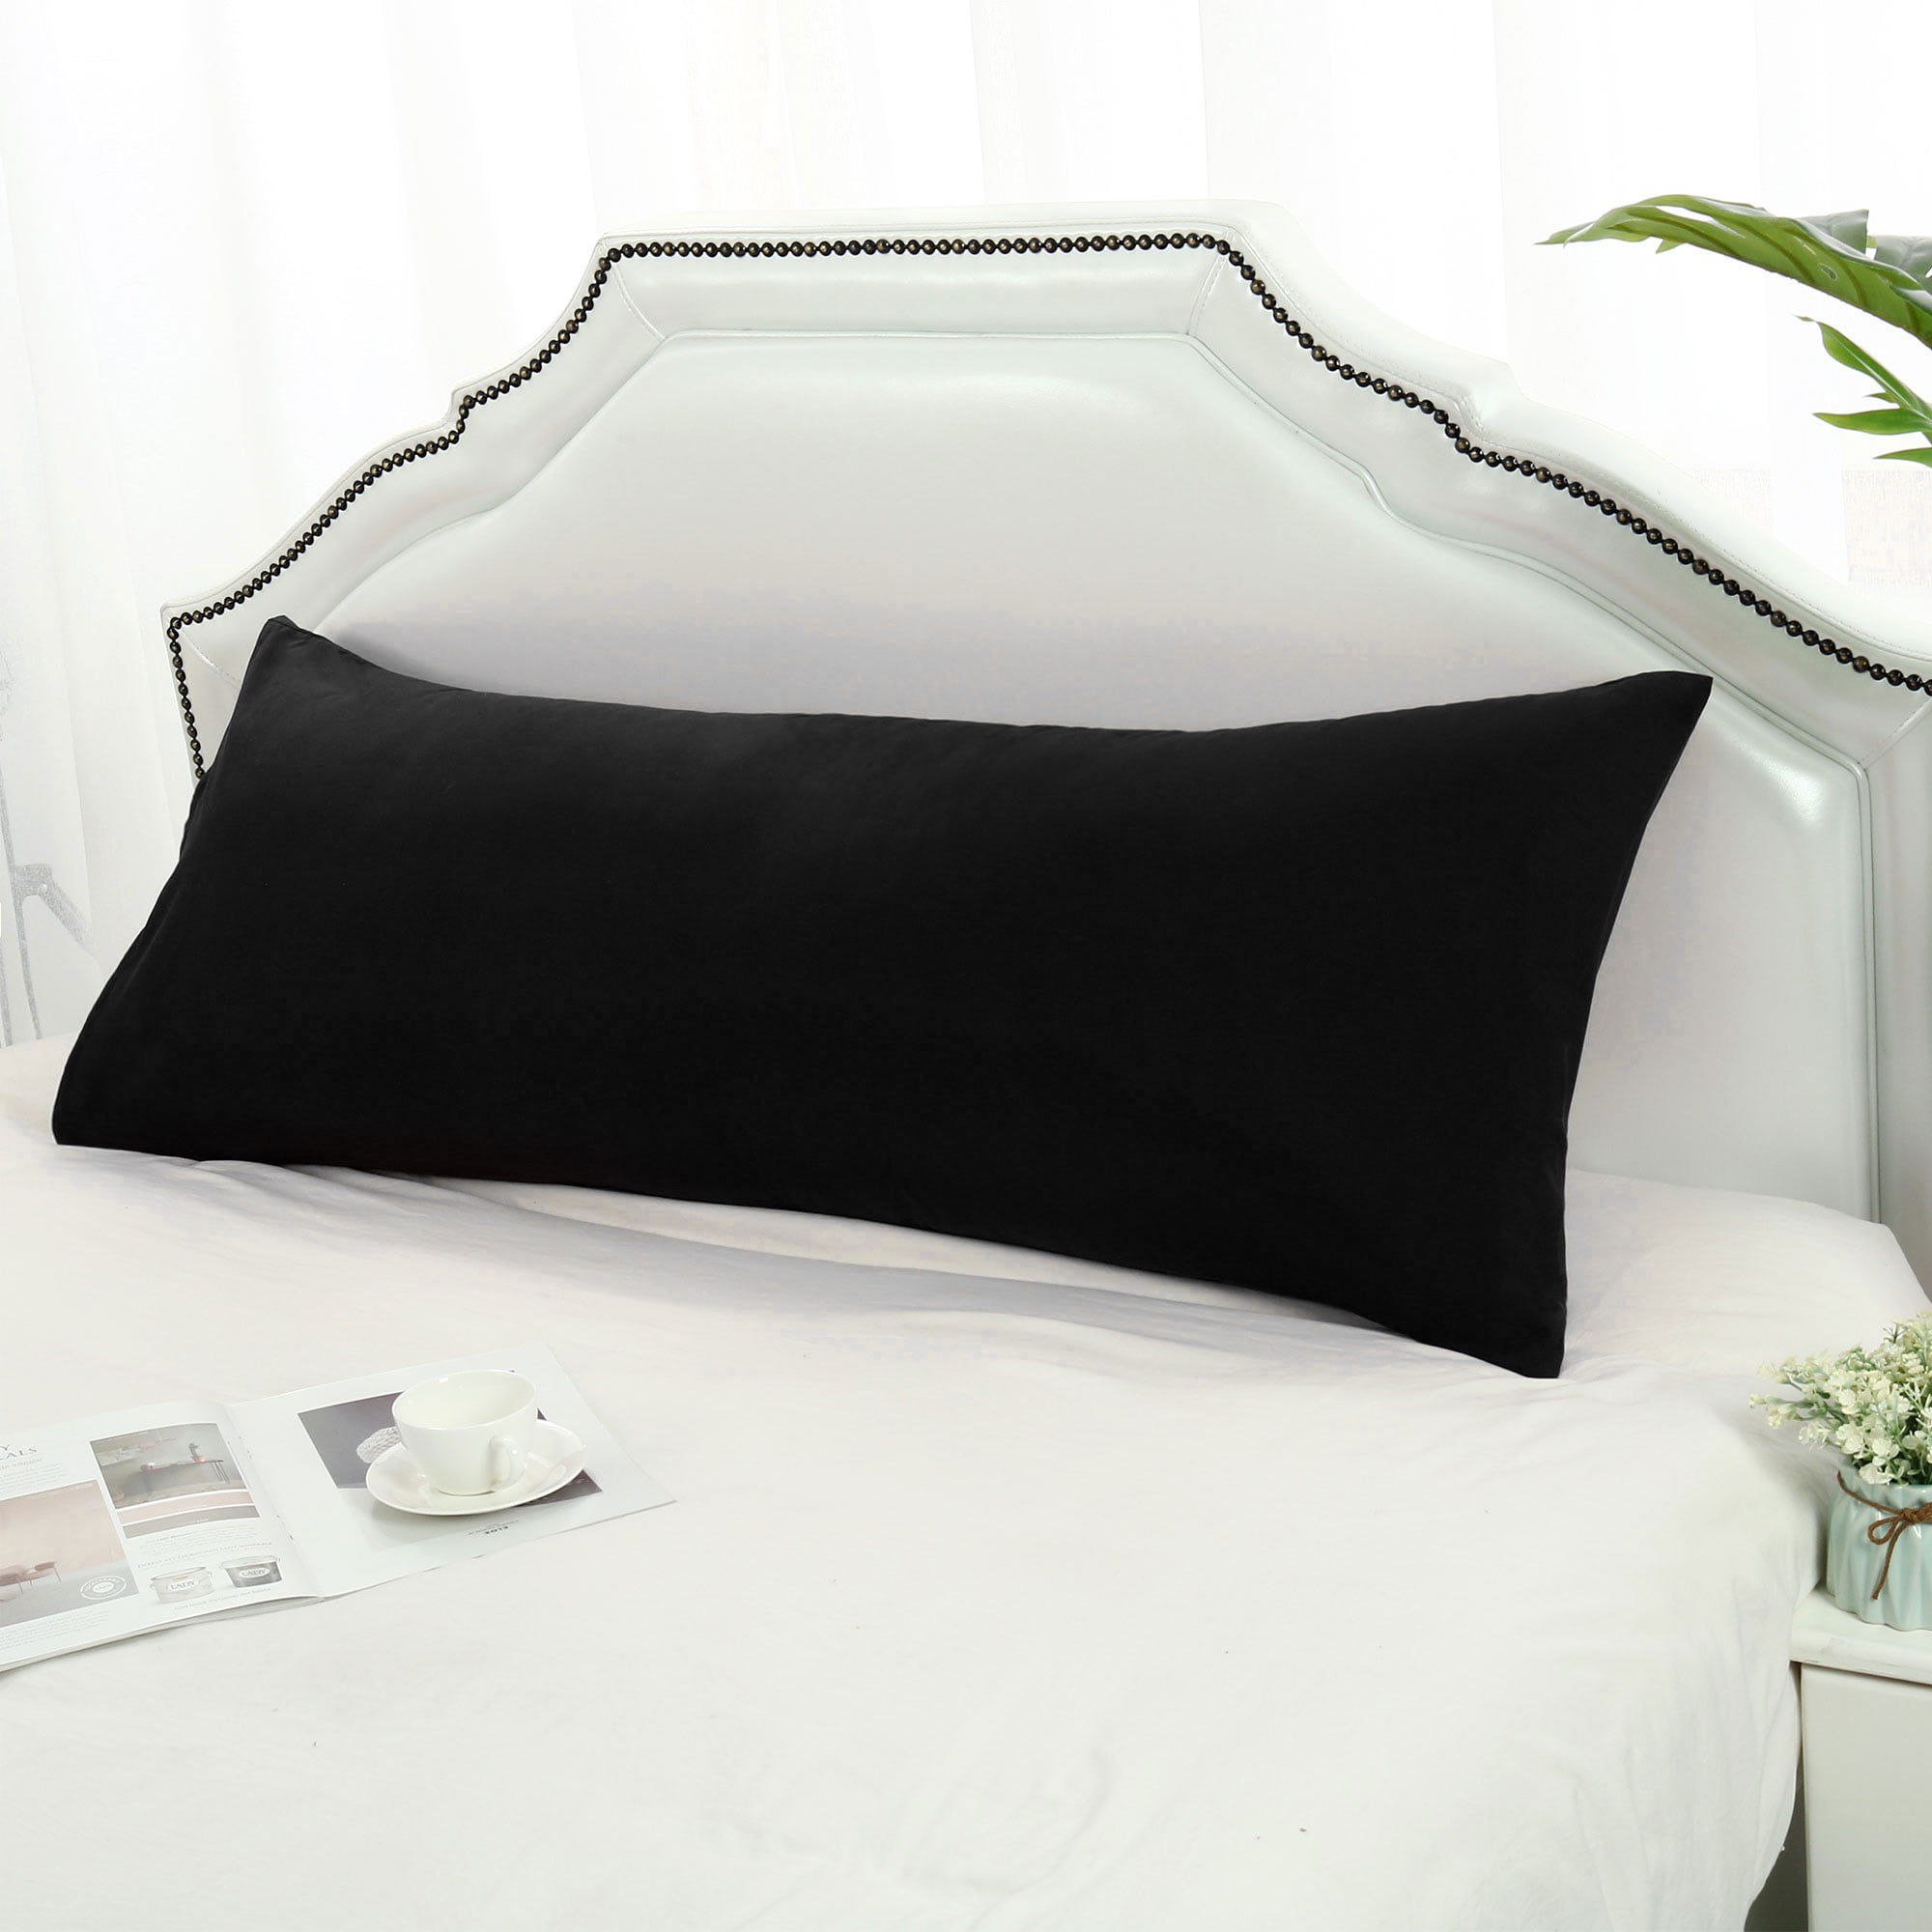 Details about   2x Faux Silk Pillow Cases Only Pillow Cover Zipper Plain Bedding Home Decor 